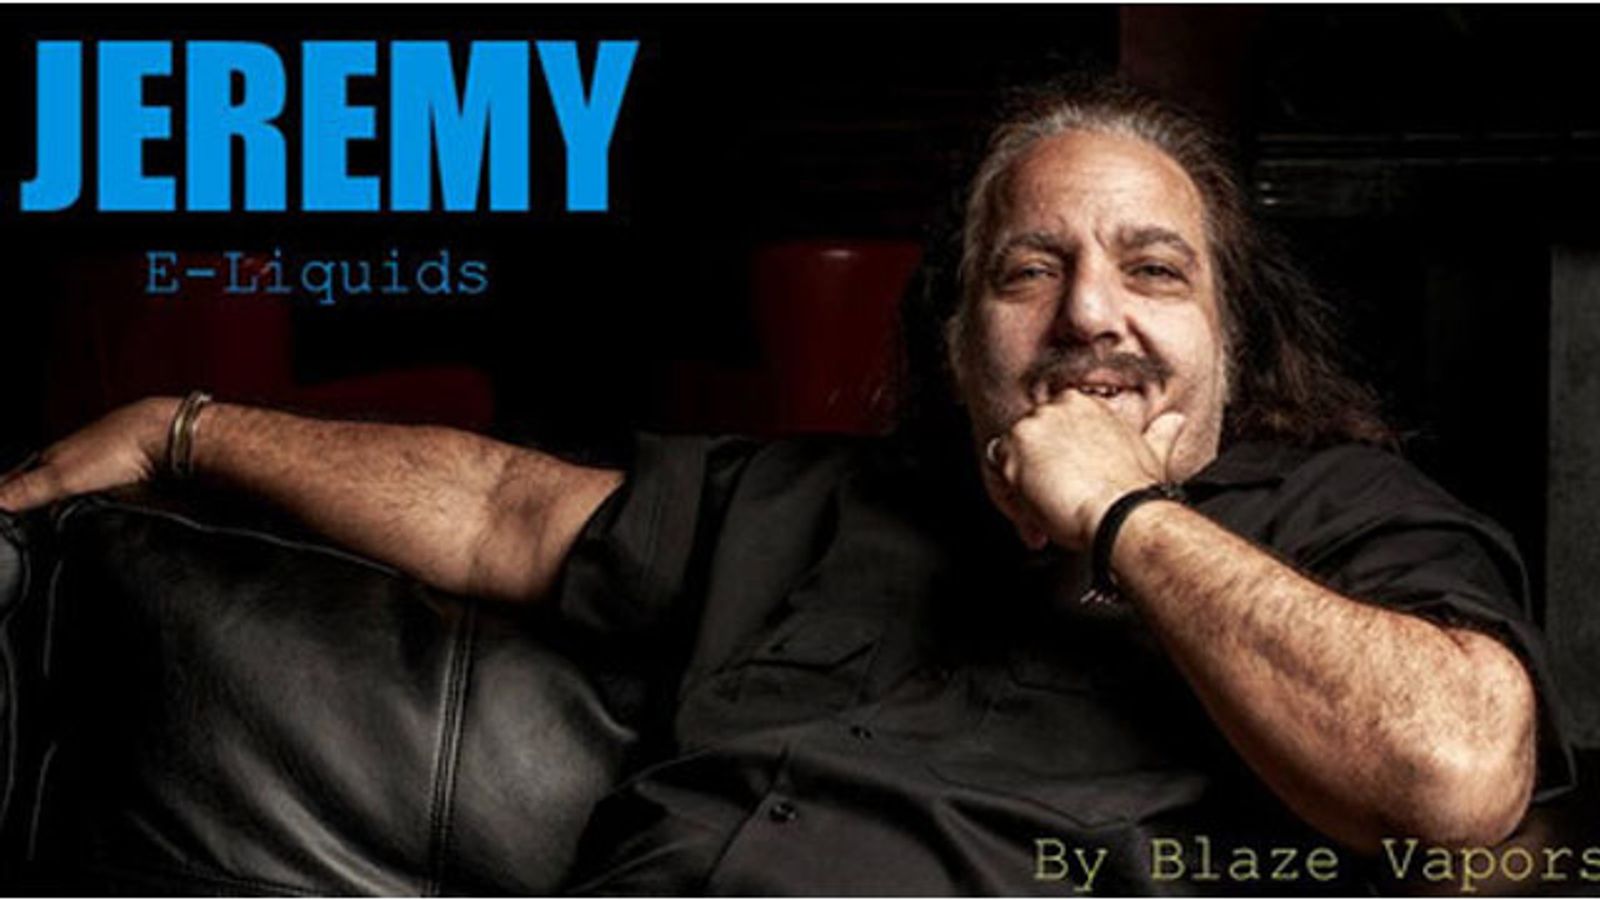 Blaze Vapors Introduces Ron Jeremy E-Liquids To Vape World